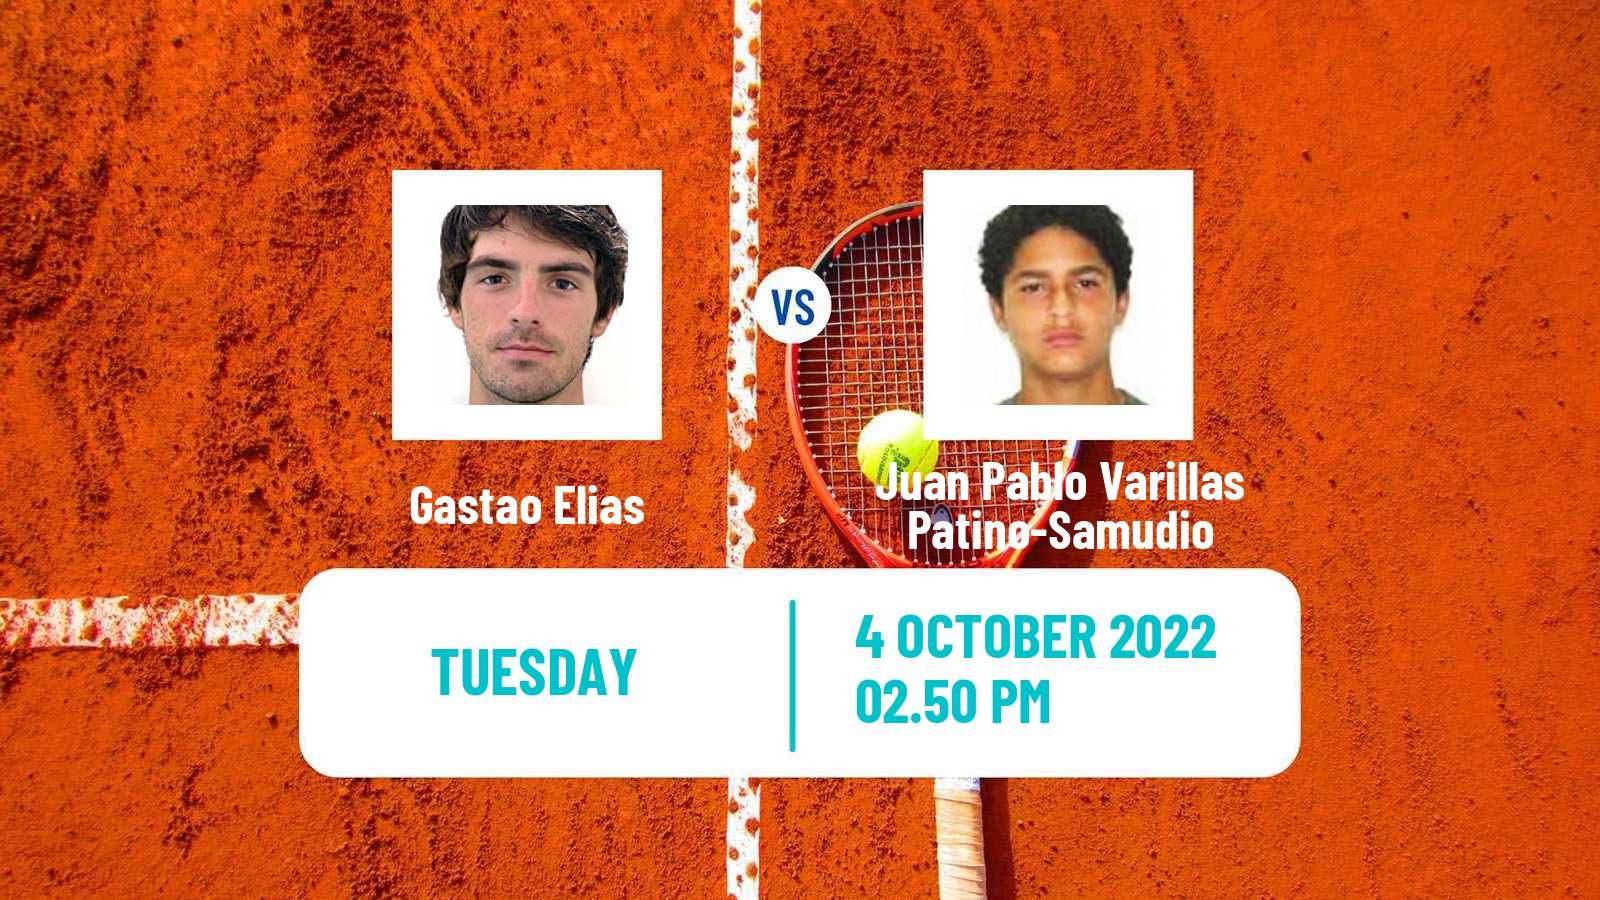 Tennis ATP Challenger Gastao Elias - Juan Pablo Varillas Patino-Samudio